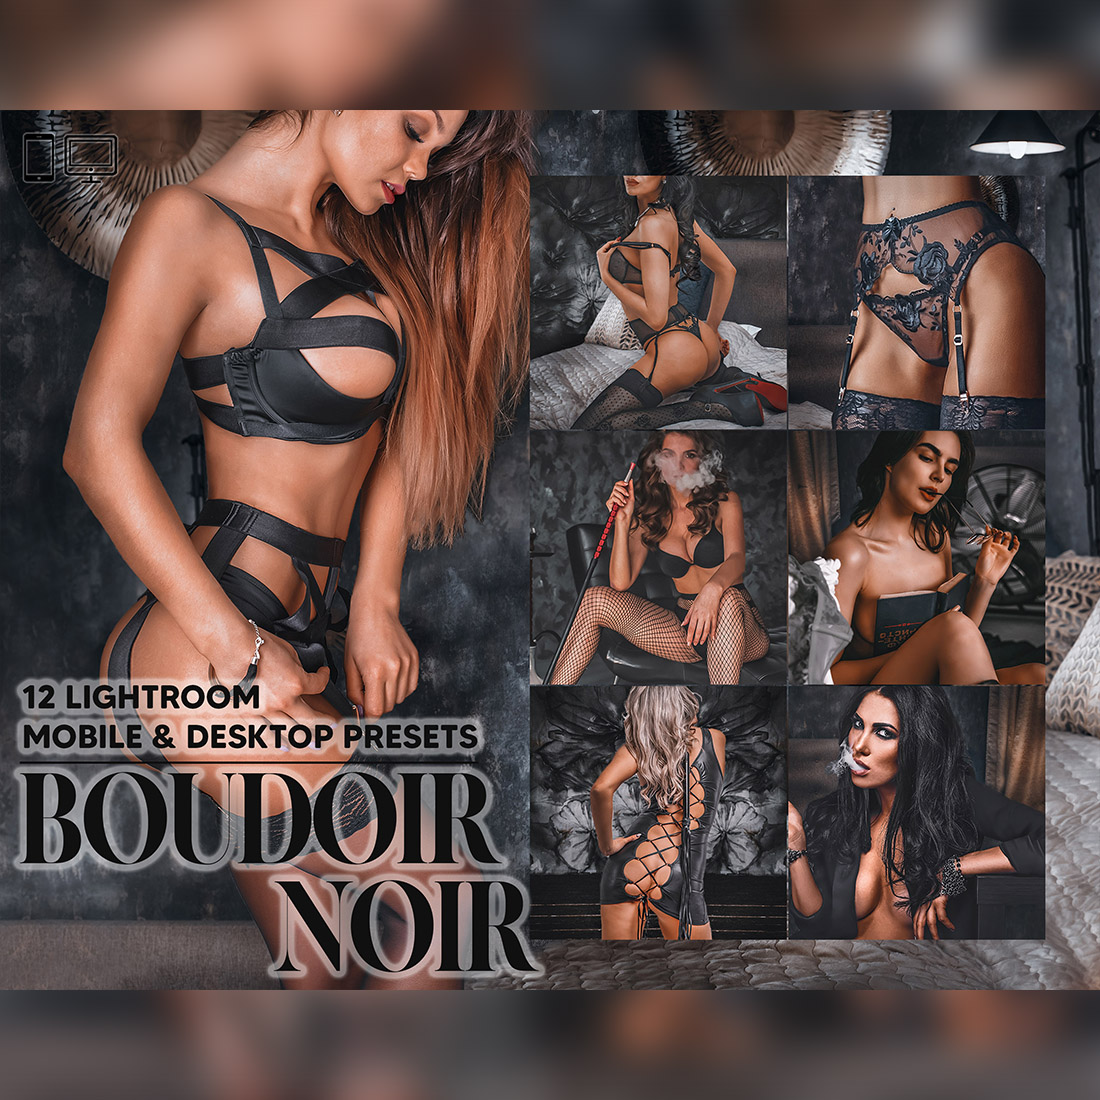 12 Boudoir Noir Lightroom Presets, Moody Sexy Mobile Preset, Warm Nude Desktop, Lifestyle Portrait Theme Instagram LR Filter DNG Sensual cover image.